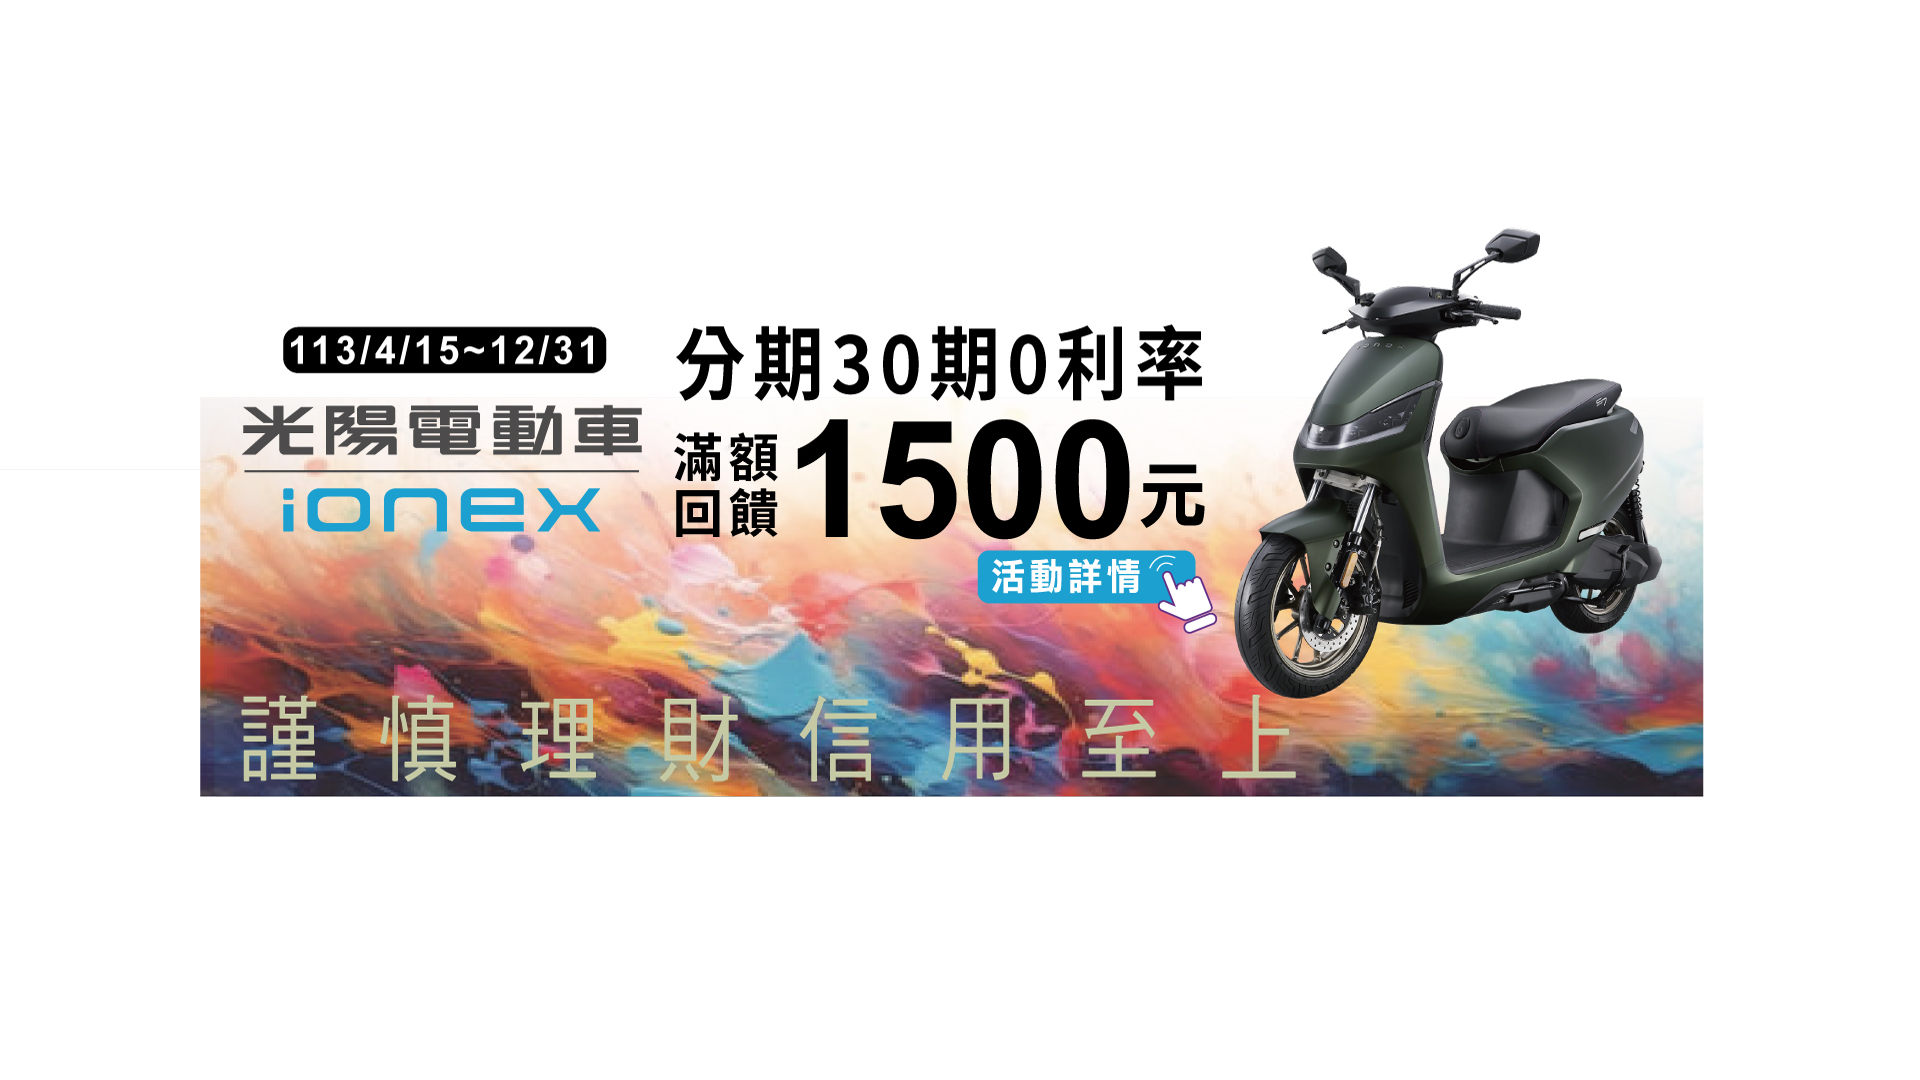 「Ionex光陽電動車 分期30期0利率 滿額回饋1500元」BANNER